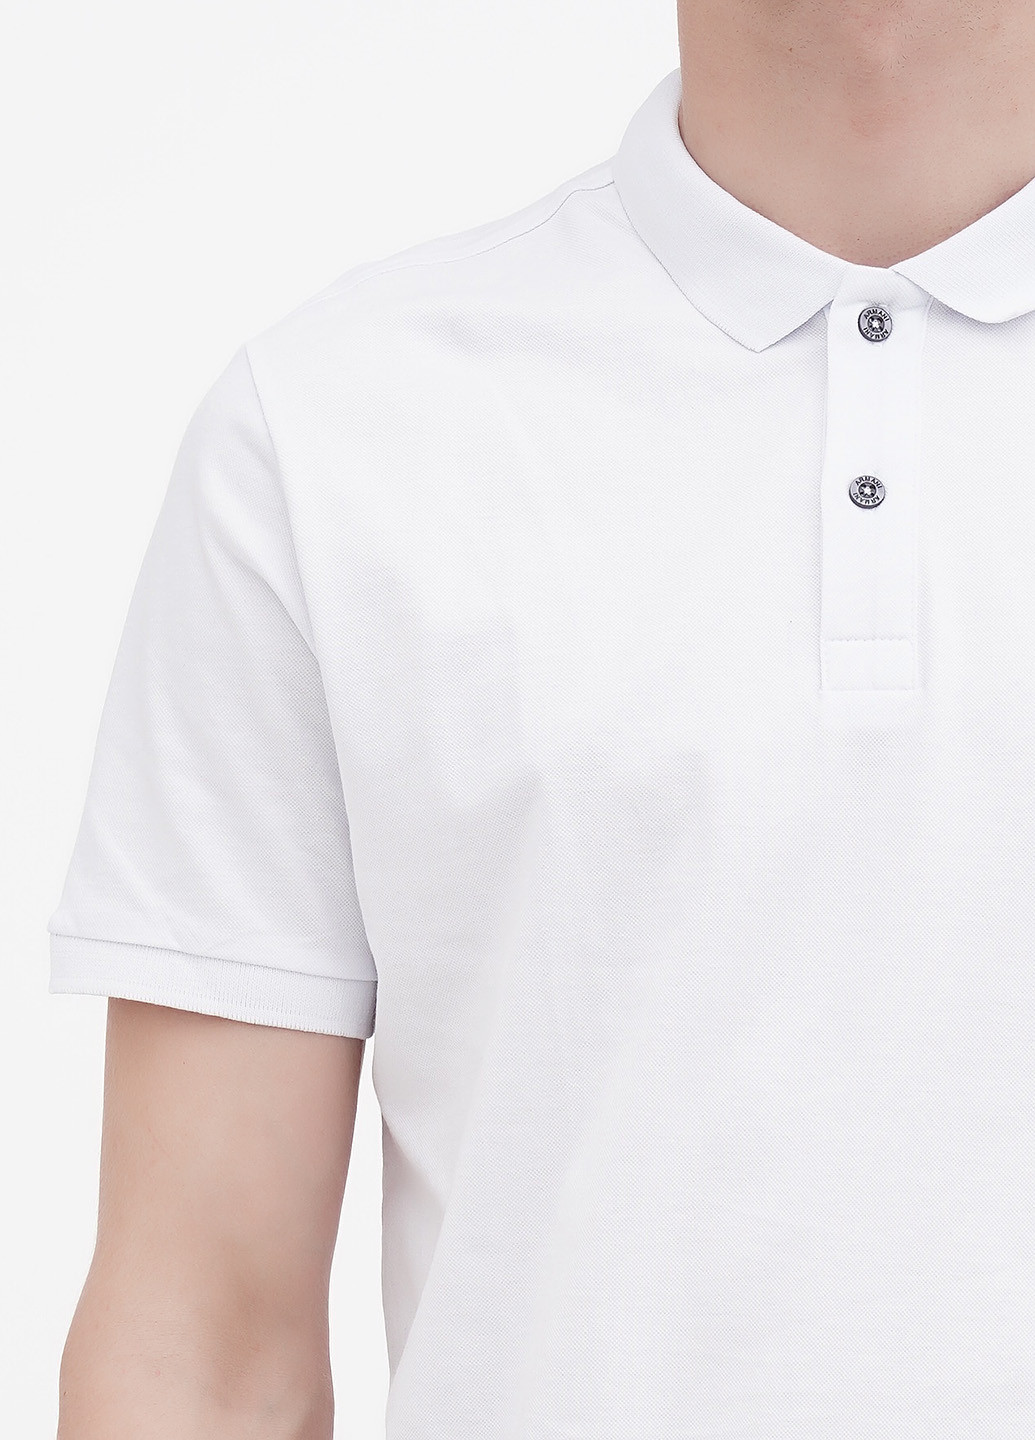 Белая футболка-поло для мужчин Armani Exchange с надписью